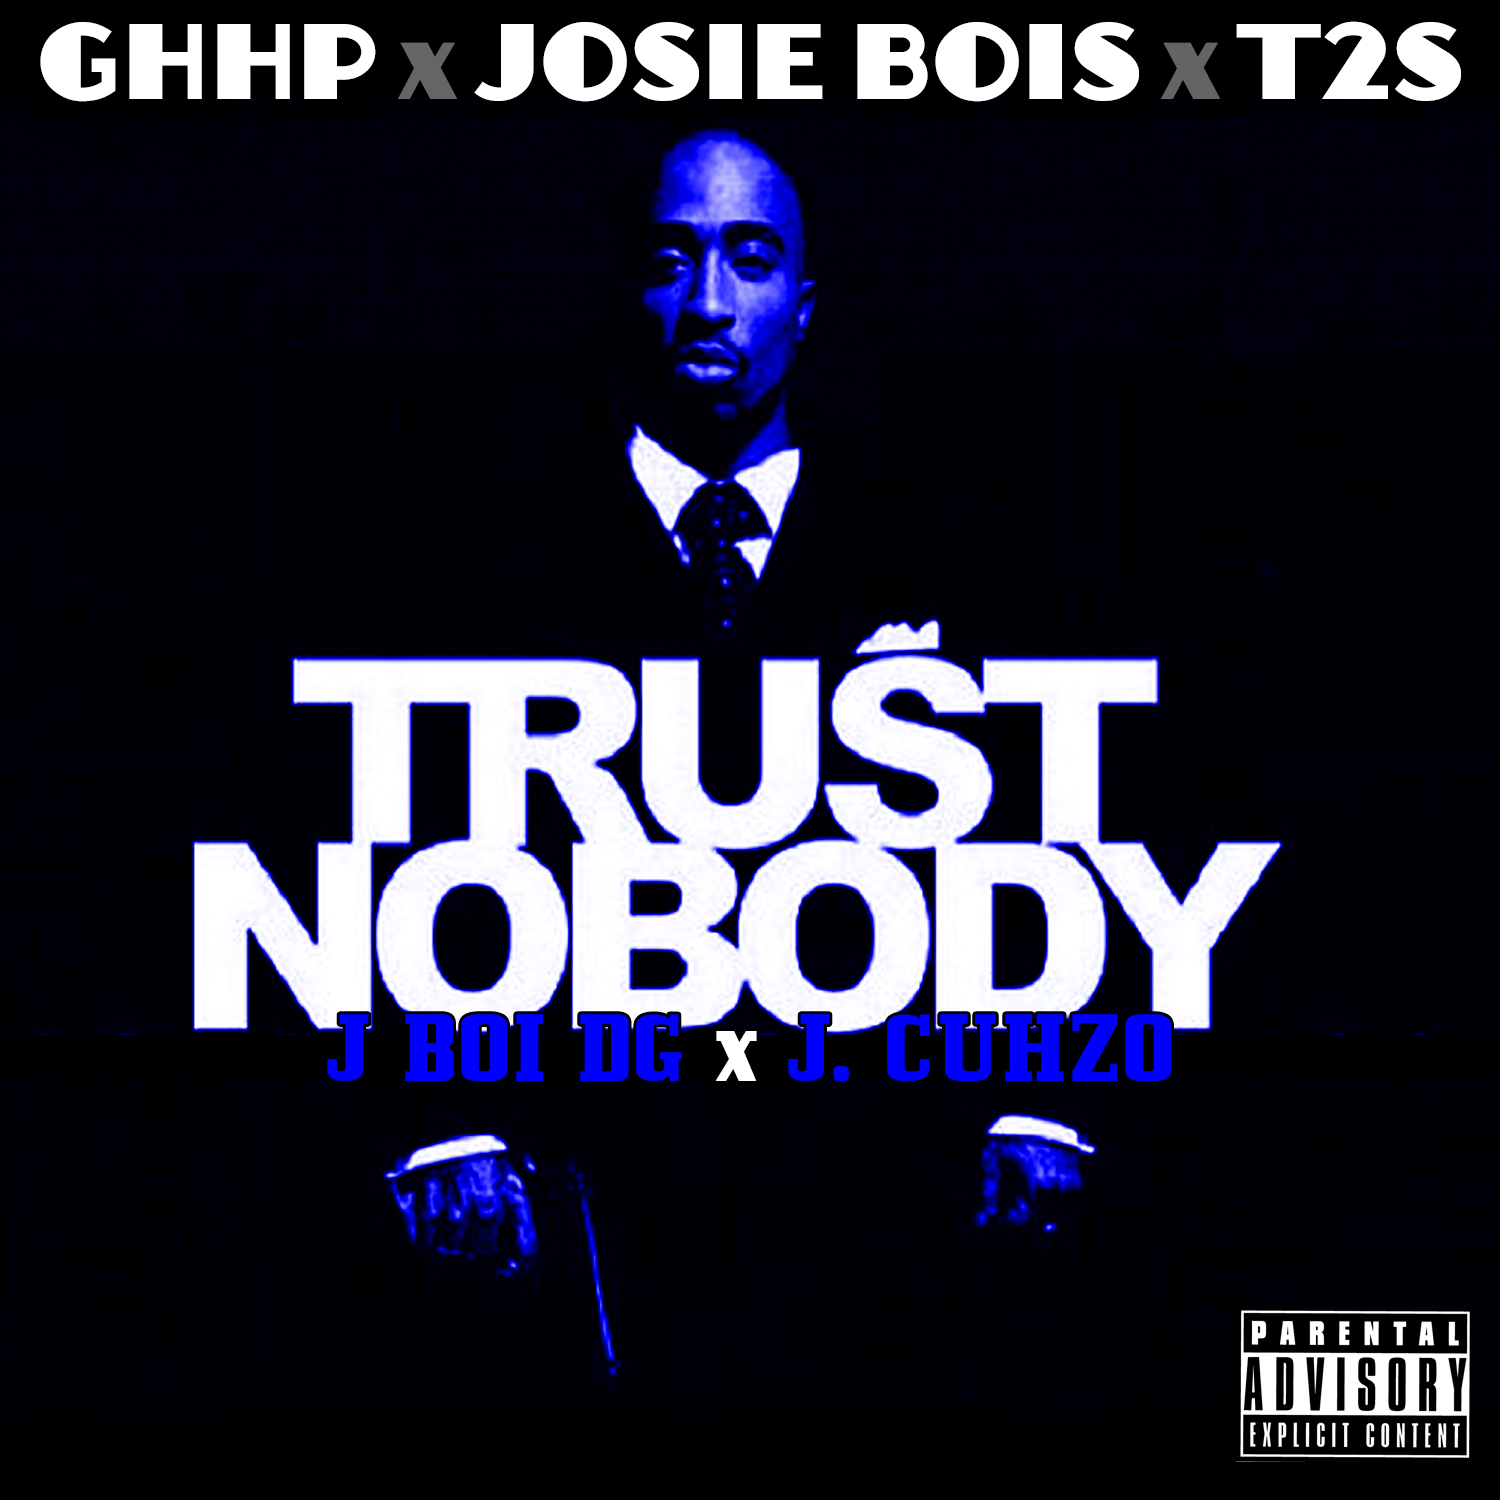 JBoi DG ft. J. Cuhzo - Trust Nobody (Produced by J. Cuhzo) [Thizzler.com]